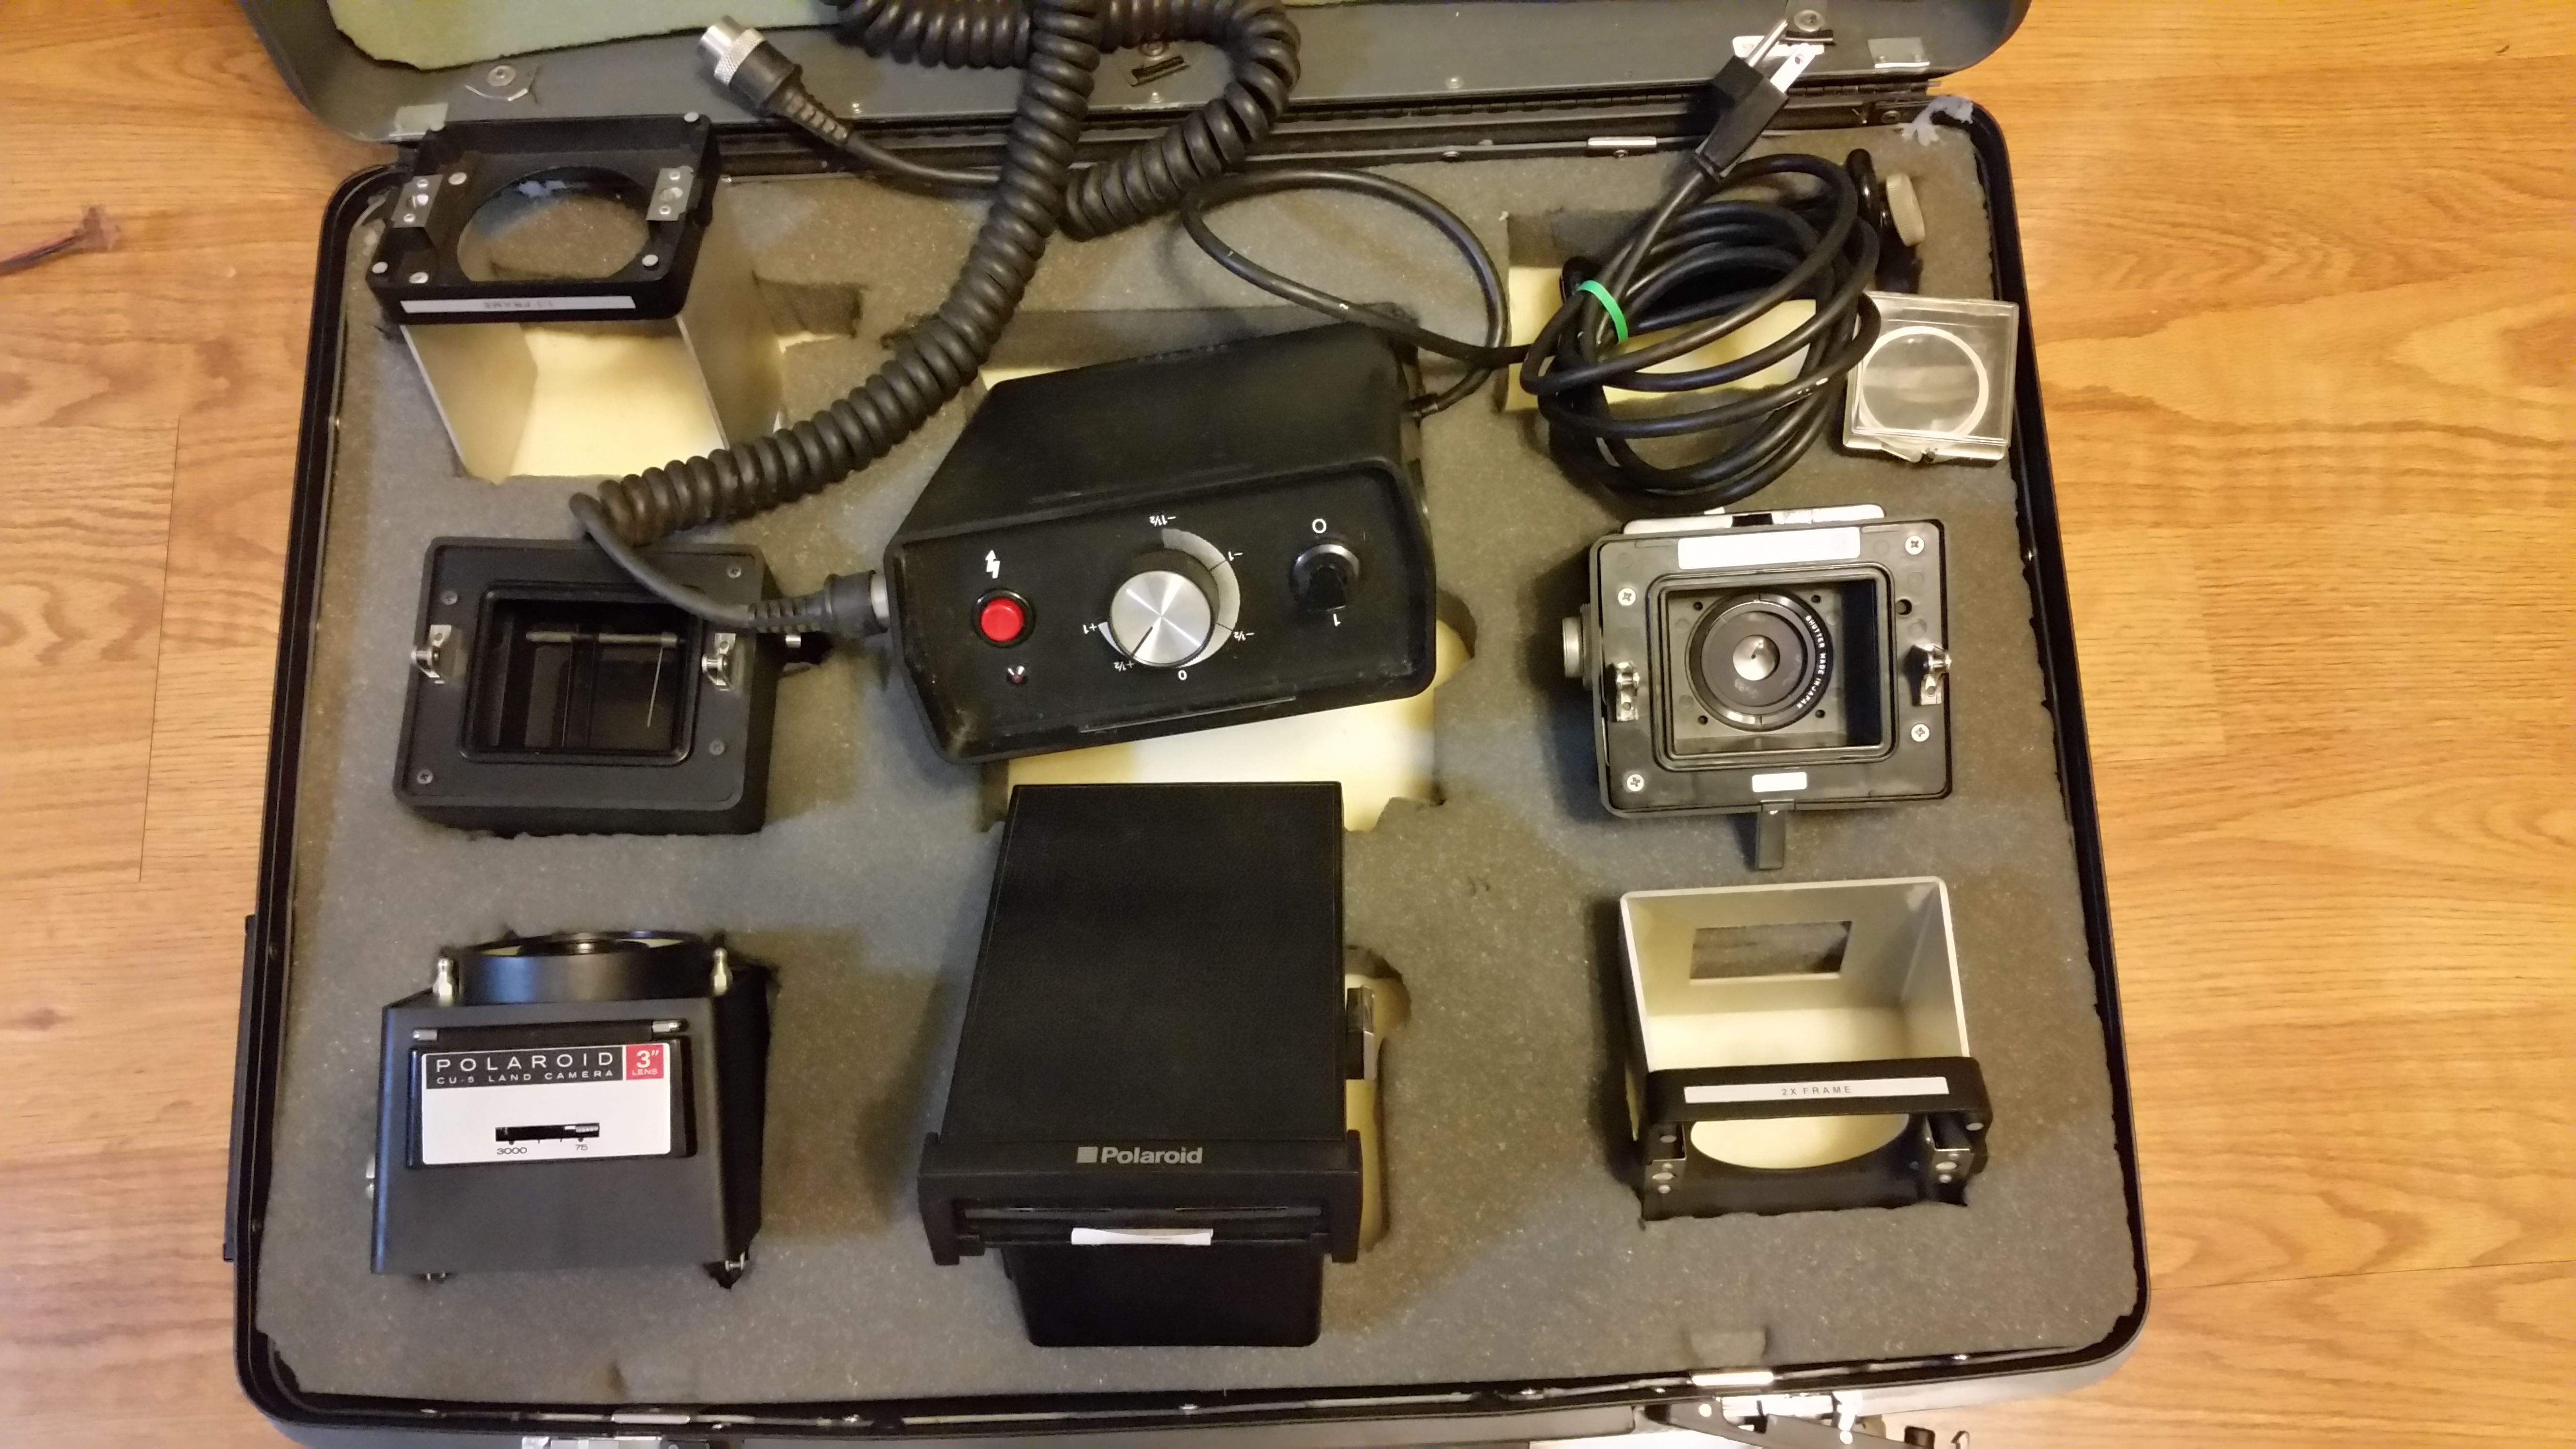 Polaroid CU-5 Land Camera Viewfinder Vintage Lens Instant Film Photo